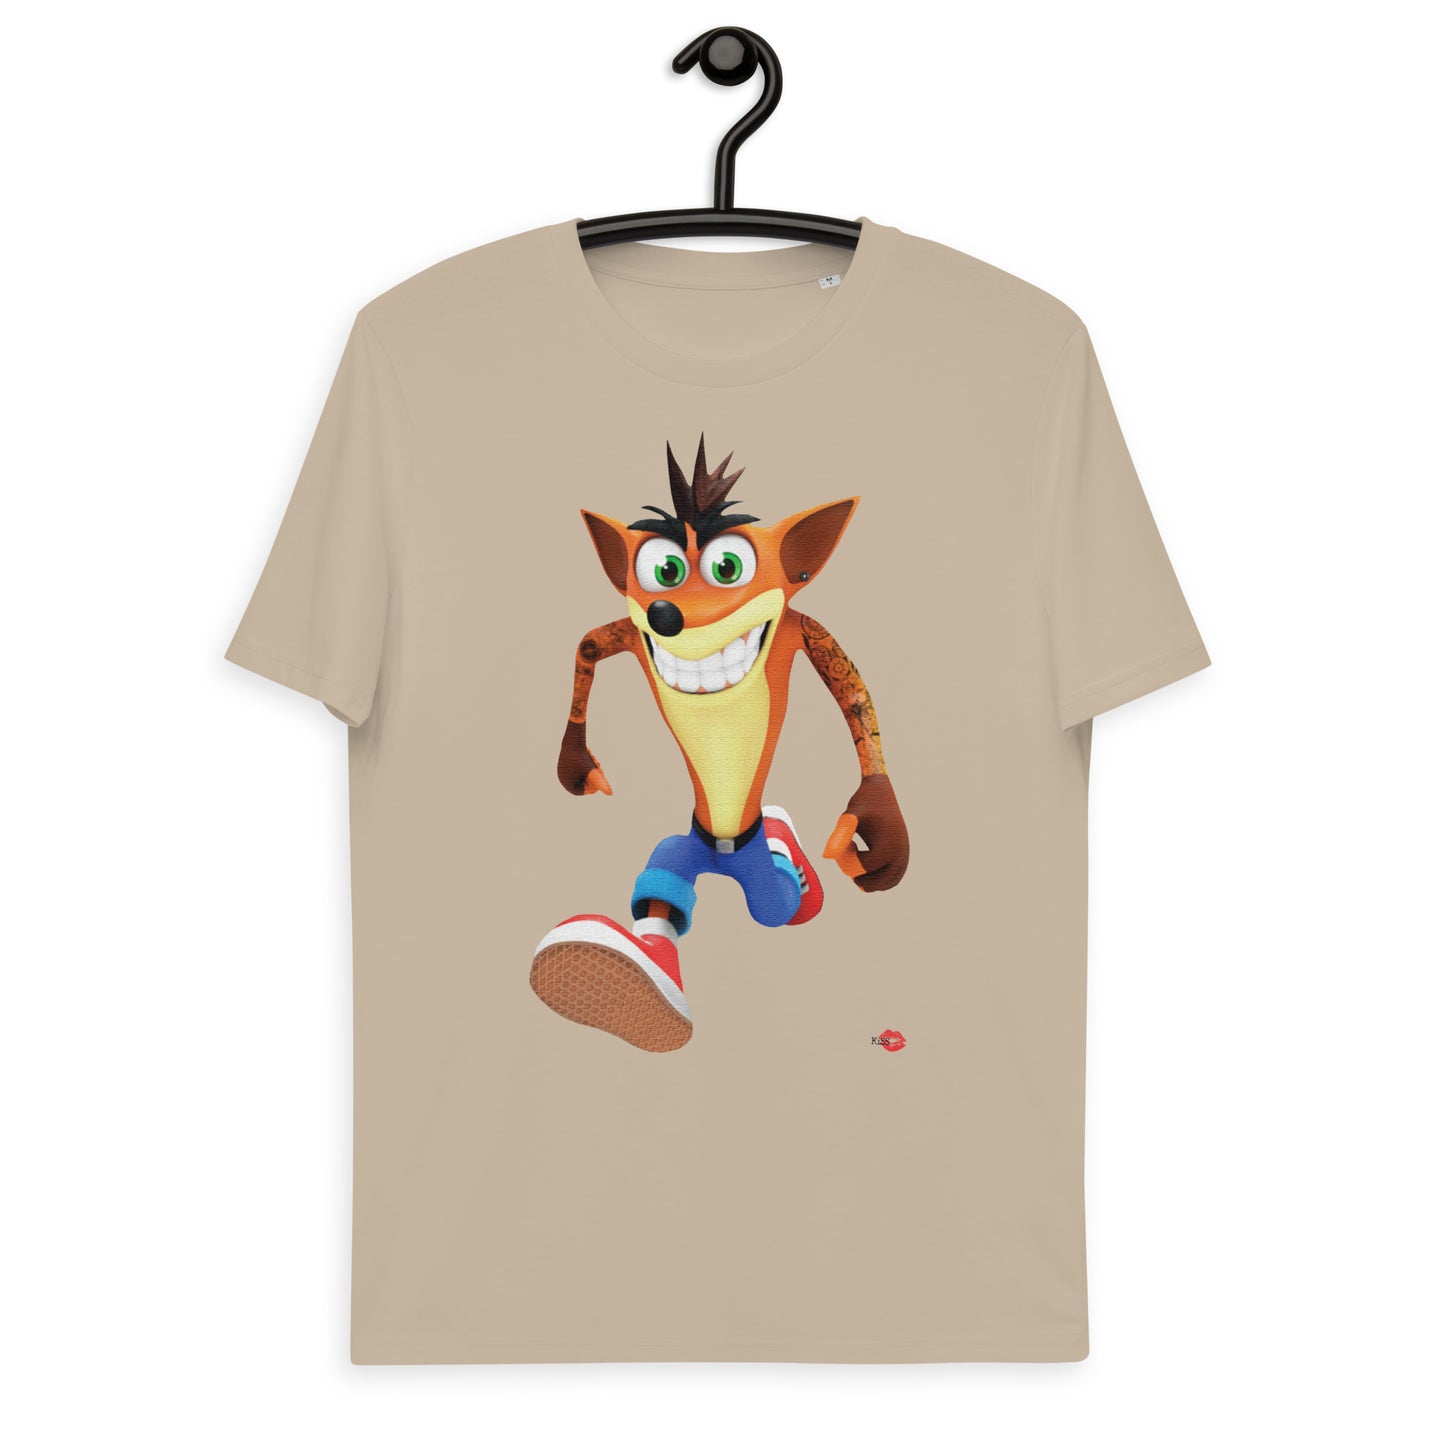 Crash Bandicoot KiSS Unisex organic cotton t-shirt - Gaming Retro gamer